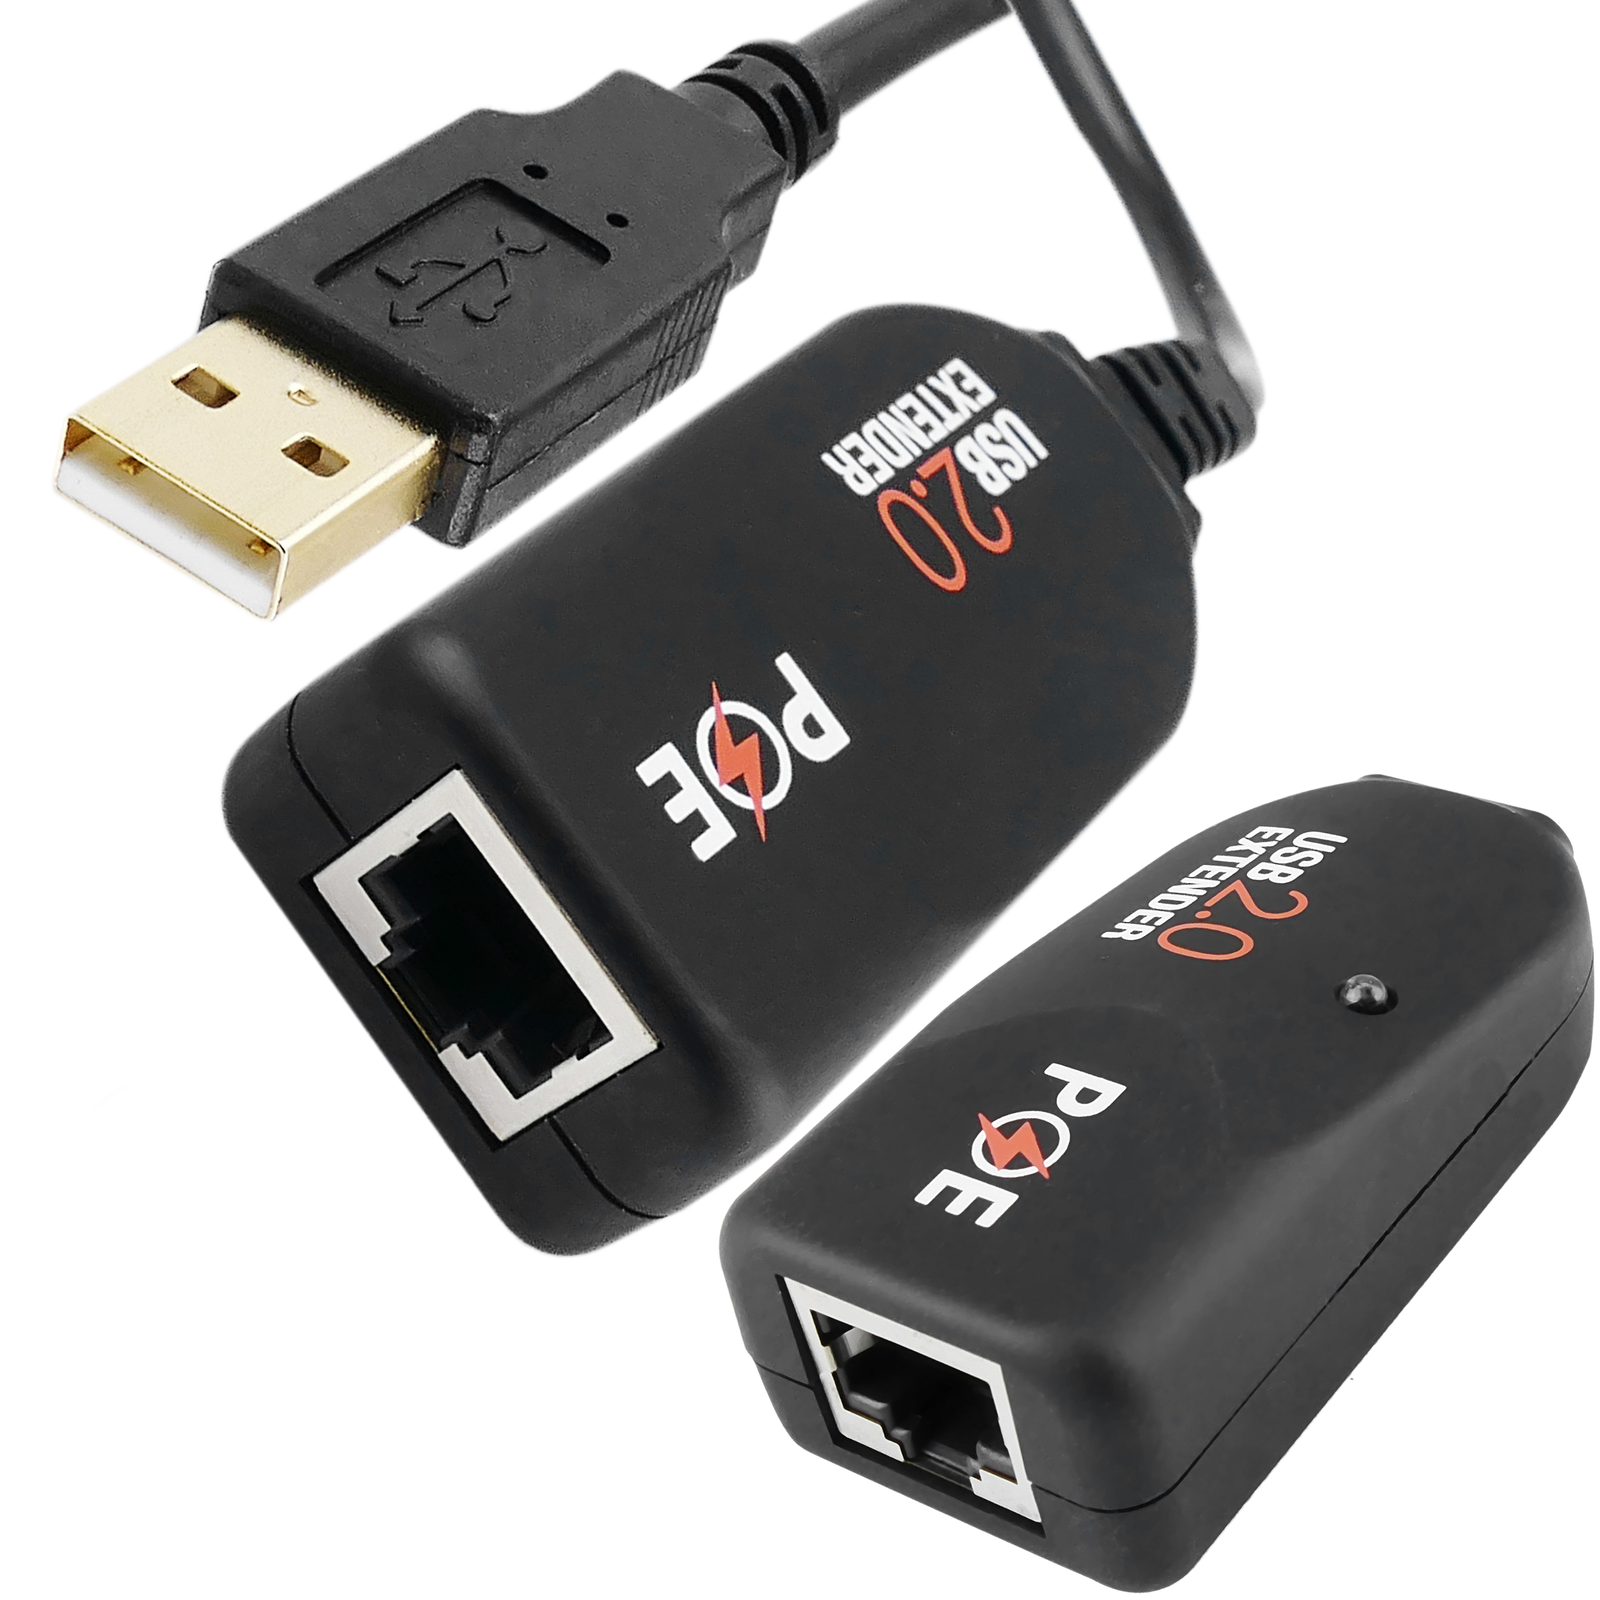 Cable 24m Extensor USB 2.0 de 4 Puertos - Cable USB 2.0